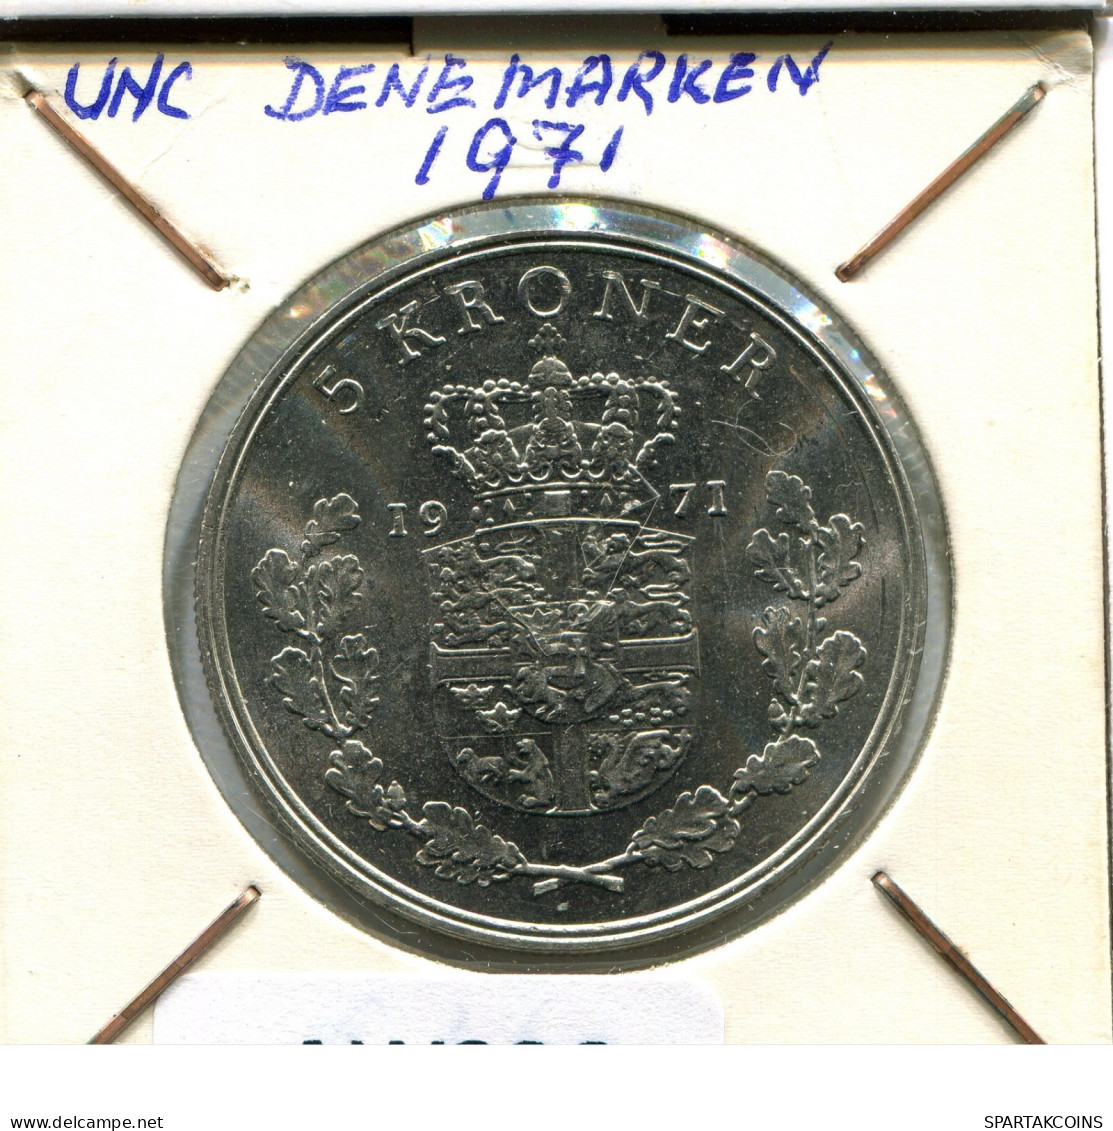 5 KRONER 1971 DANEMARK DENMARK Münze #AW326.D.A - Denemarken